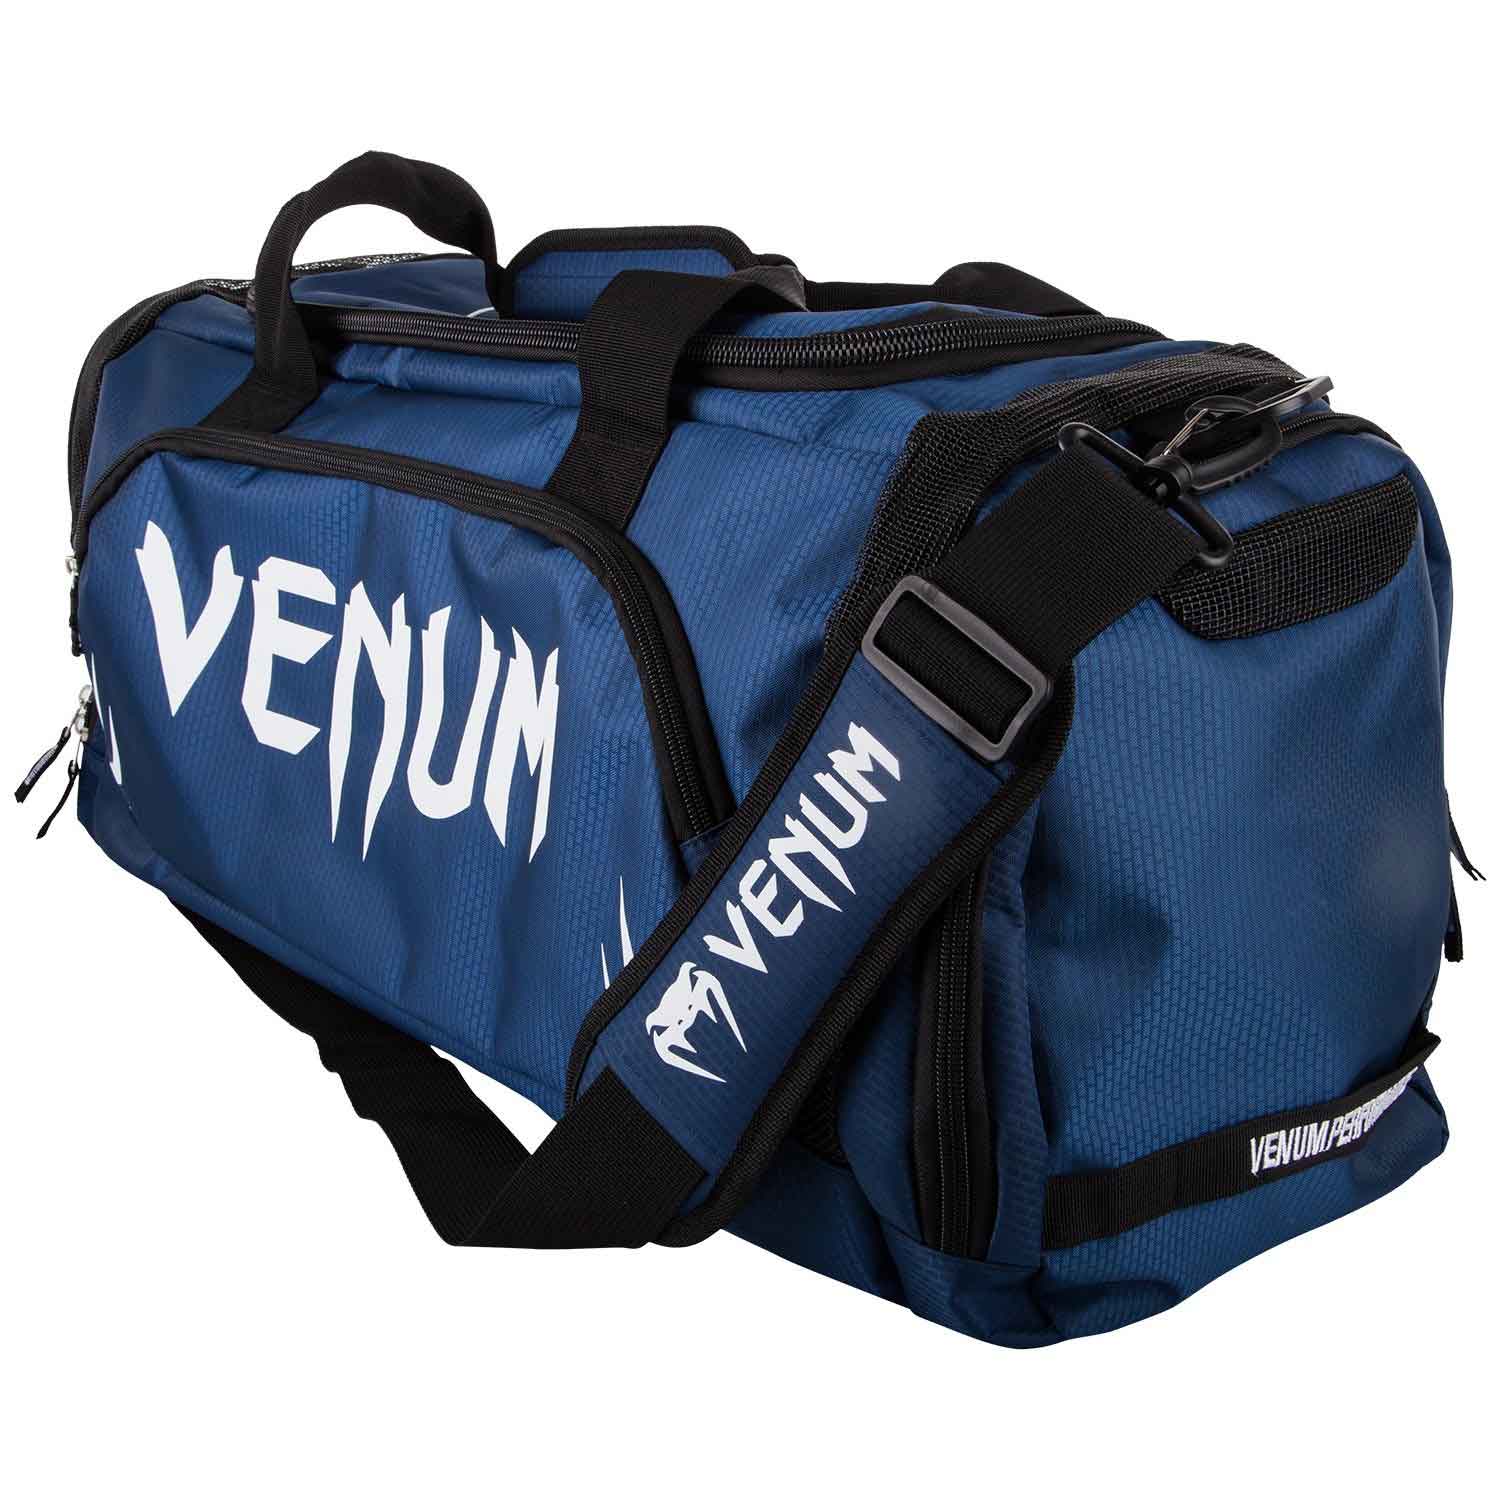 VENUM アクセサリ－ ジムバッグ(スポーツバッグ) トレーナー・ライト(ネイビーブルー/白)